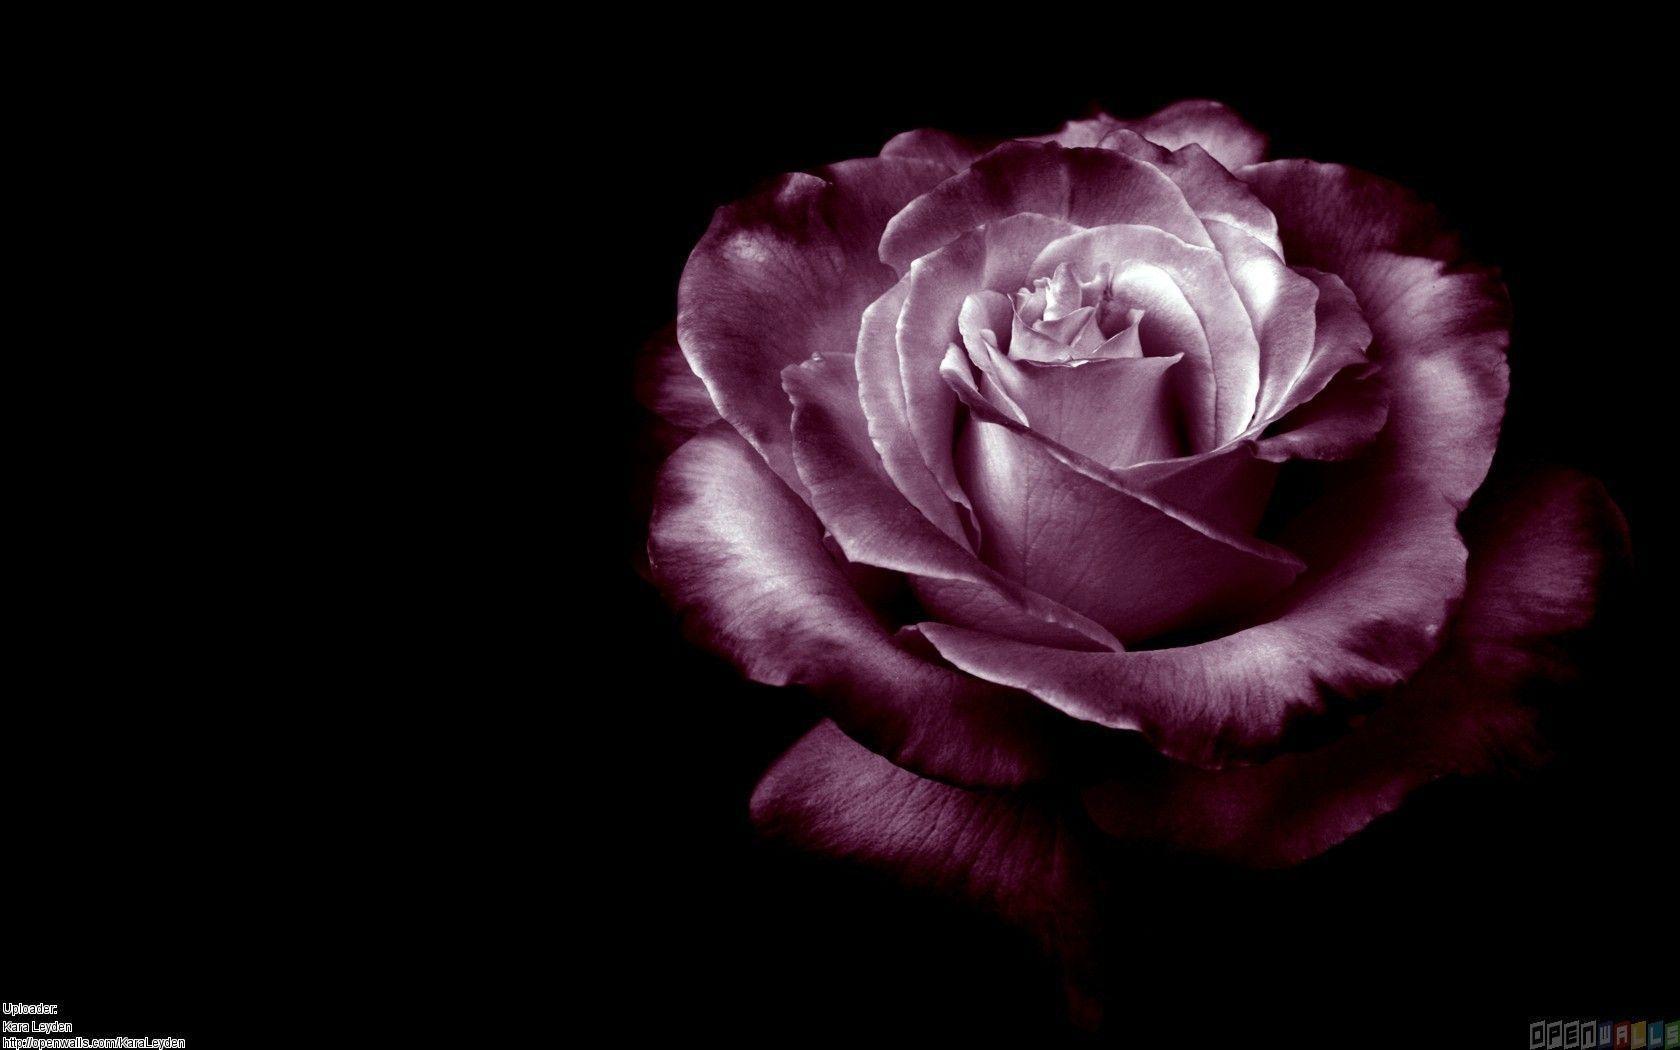 Purple Roses 120 218468 Image HD Wallpaper. Wallfoy.com